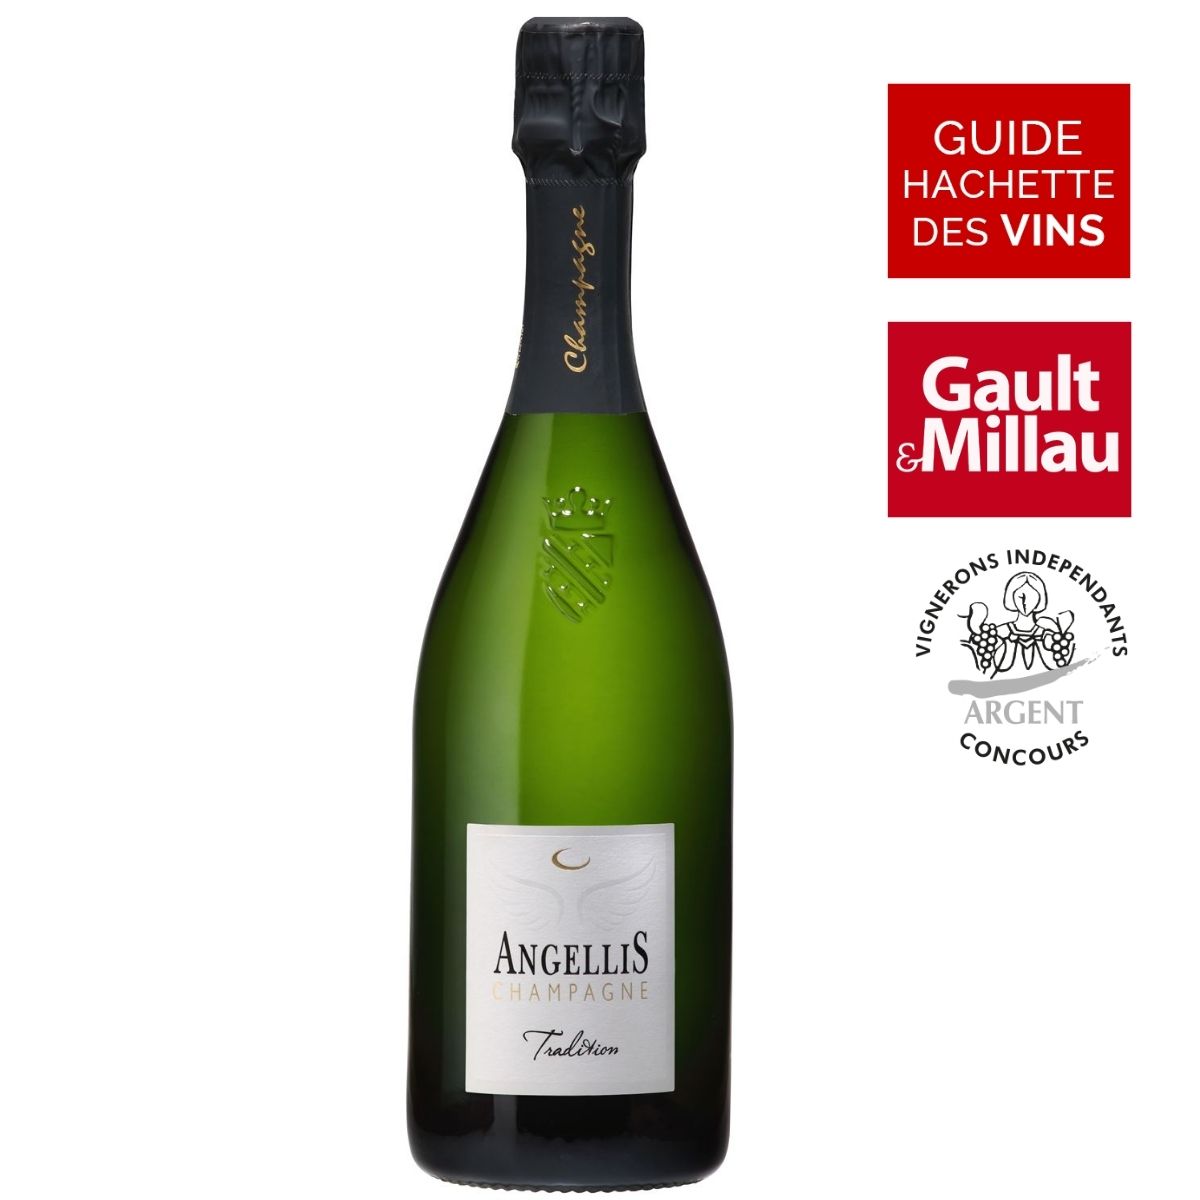 Champagne Angellis Tradition